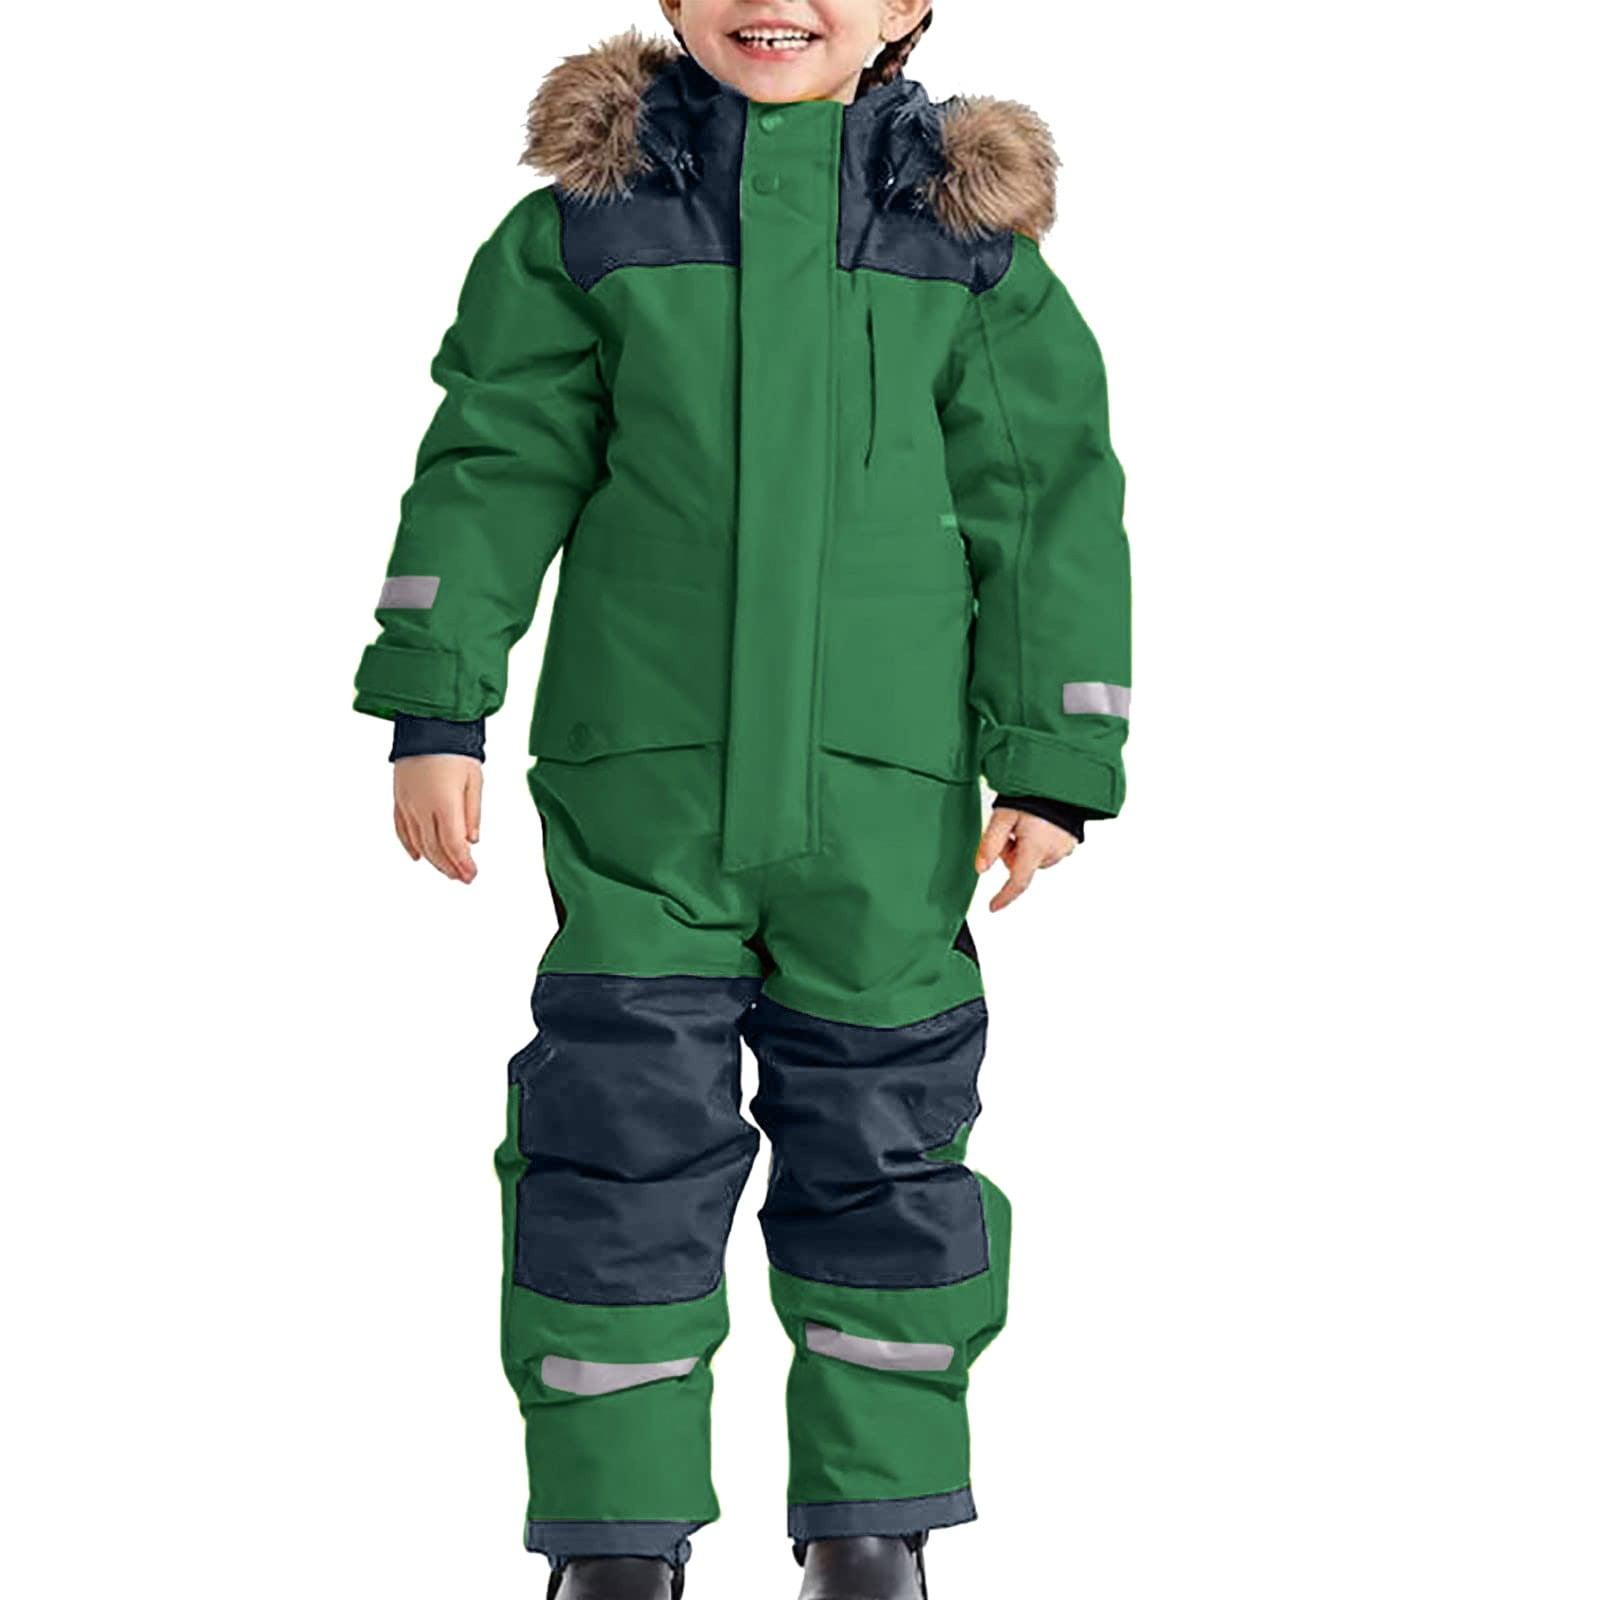 JDEFEG Snowsuit Children's Boys Ski Suit Thermal Ski Overall Winter ...